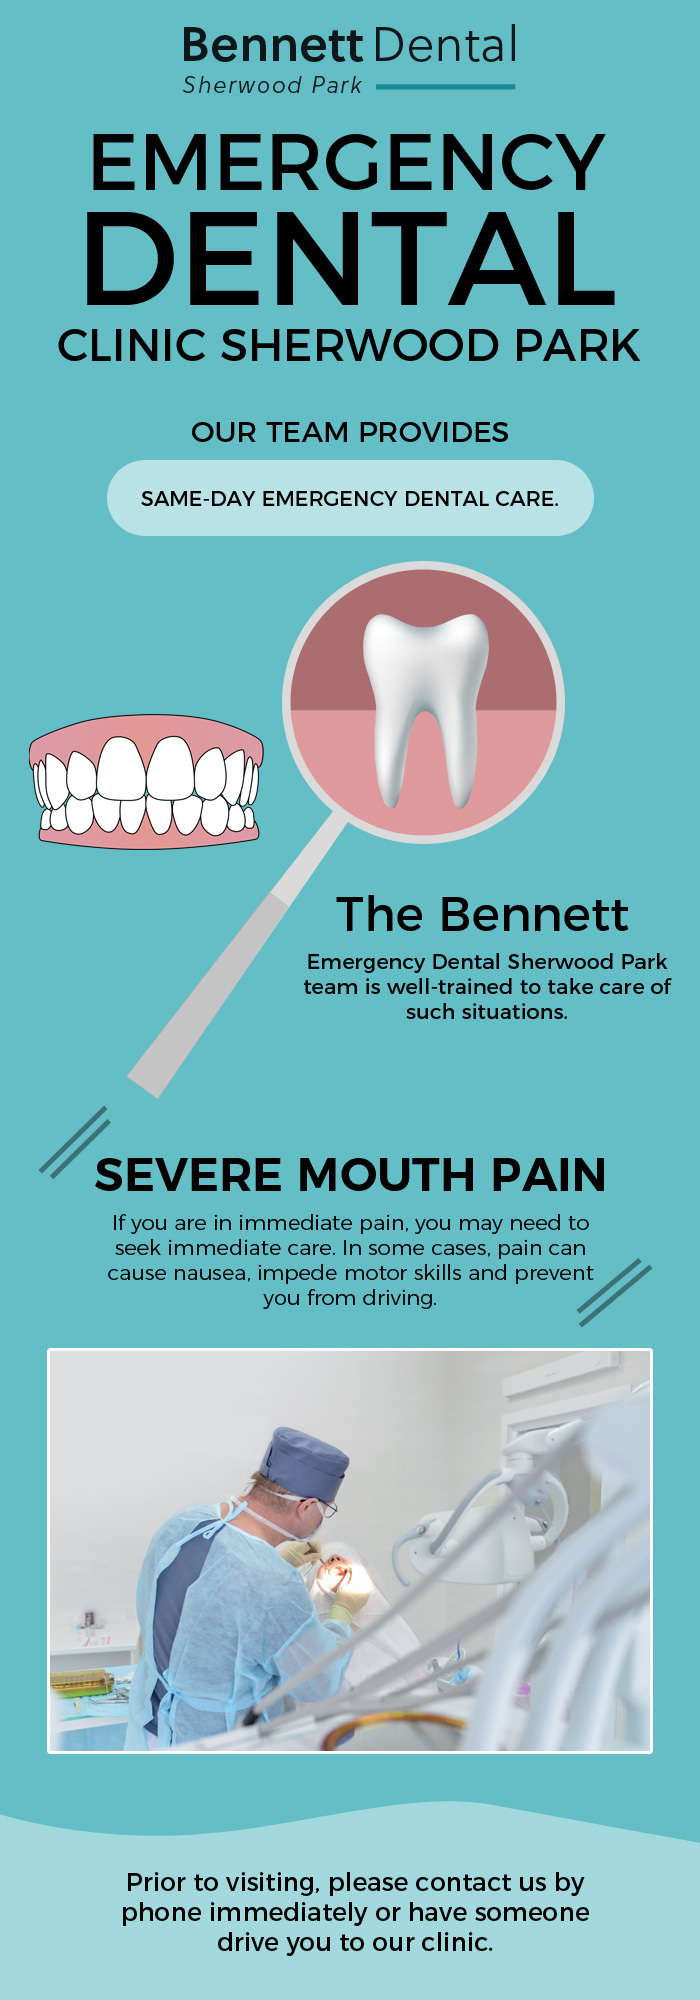 Bennett Dental – Your Trusted Emergency Dental Clinic in Sherwood Park